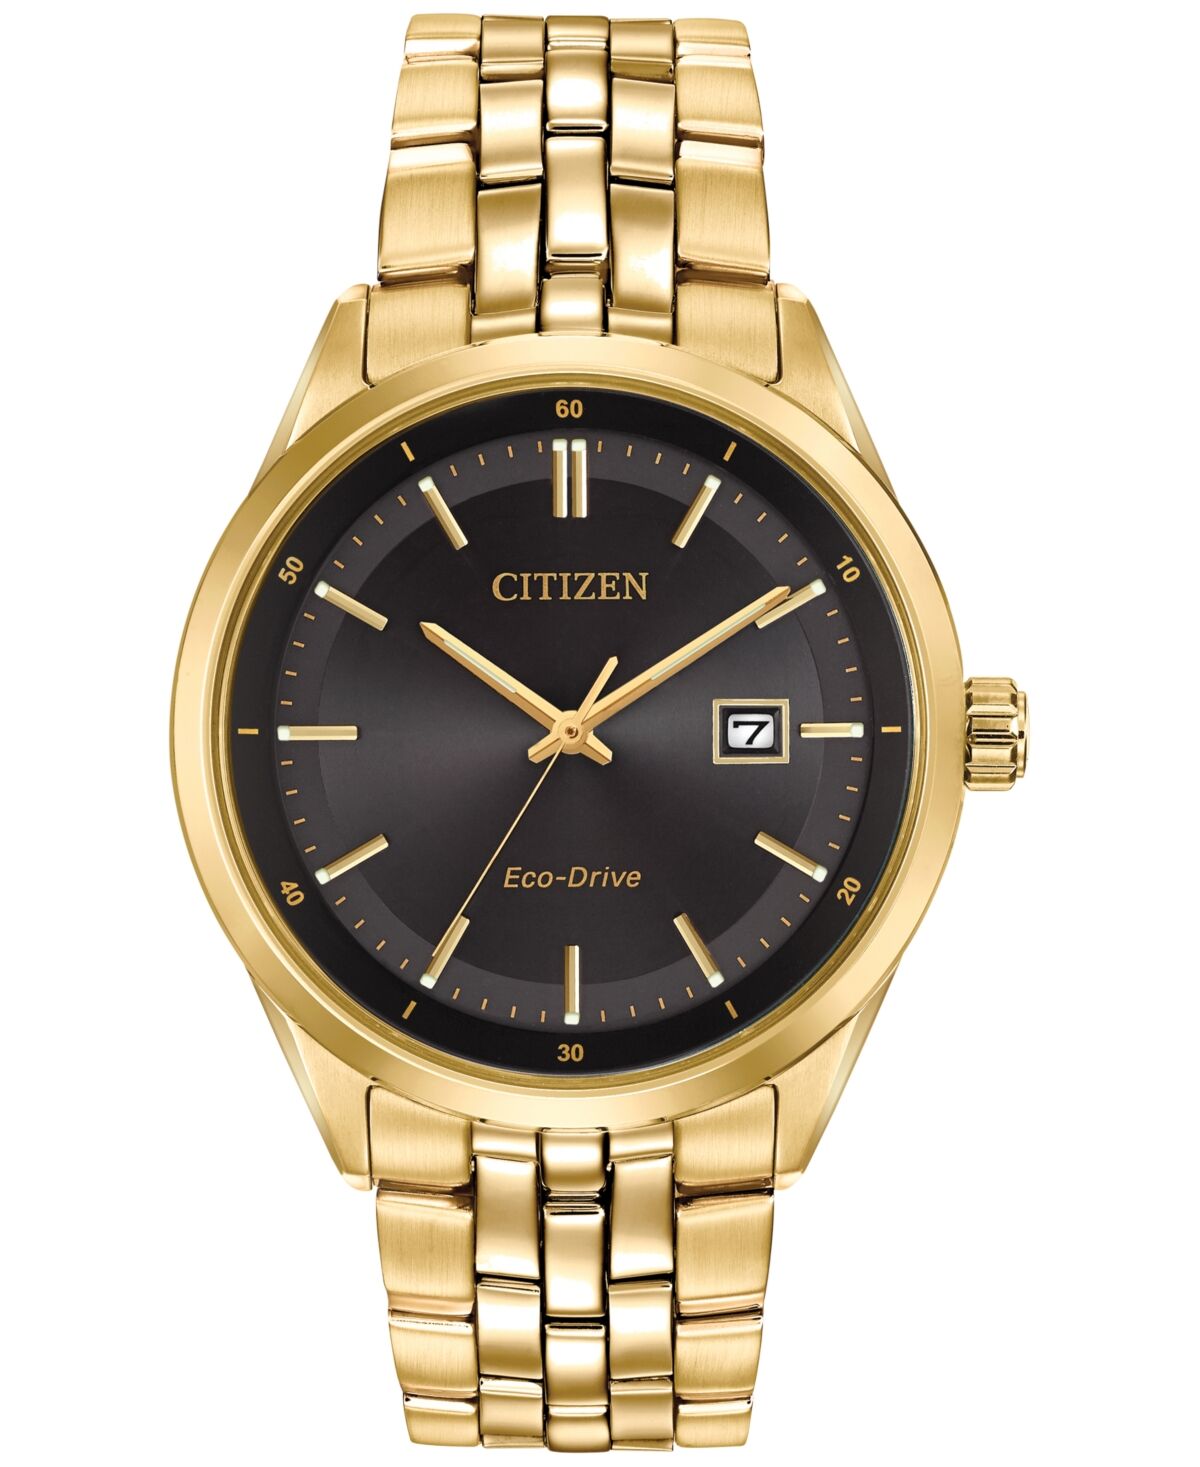 Citizen Men's Eco-Drive Gold-Tone Stainless Steel Bracelet Watch 41mm BM7252-51E - Gold